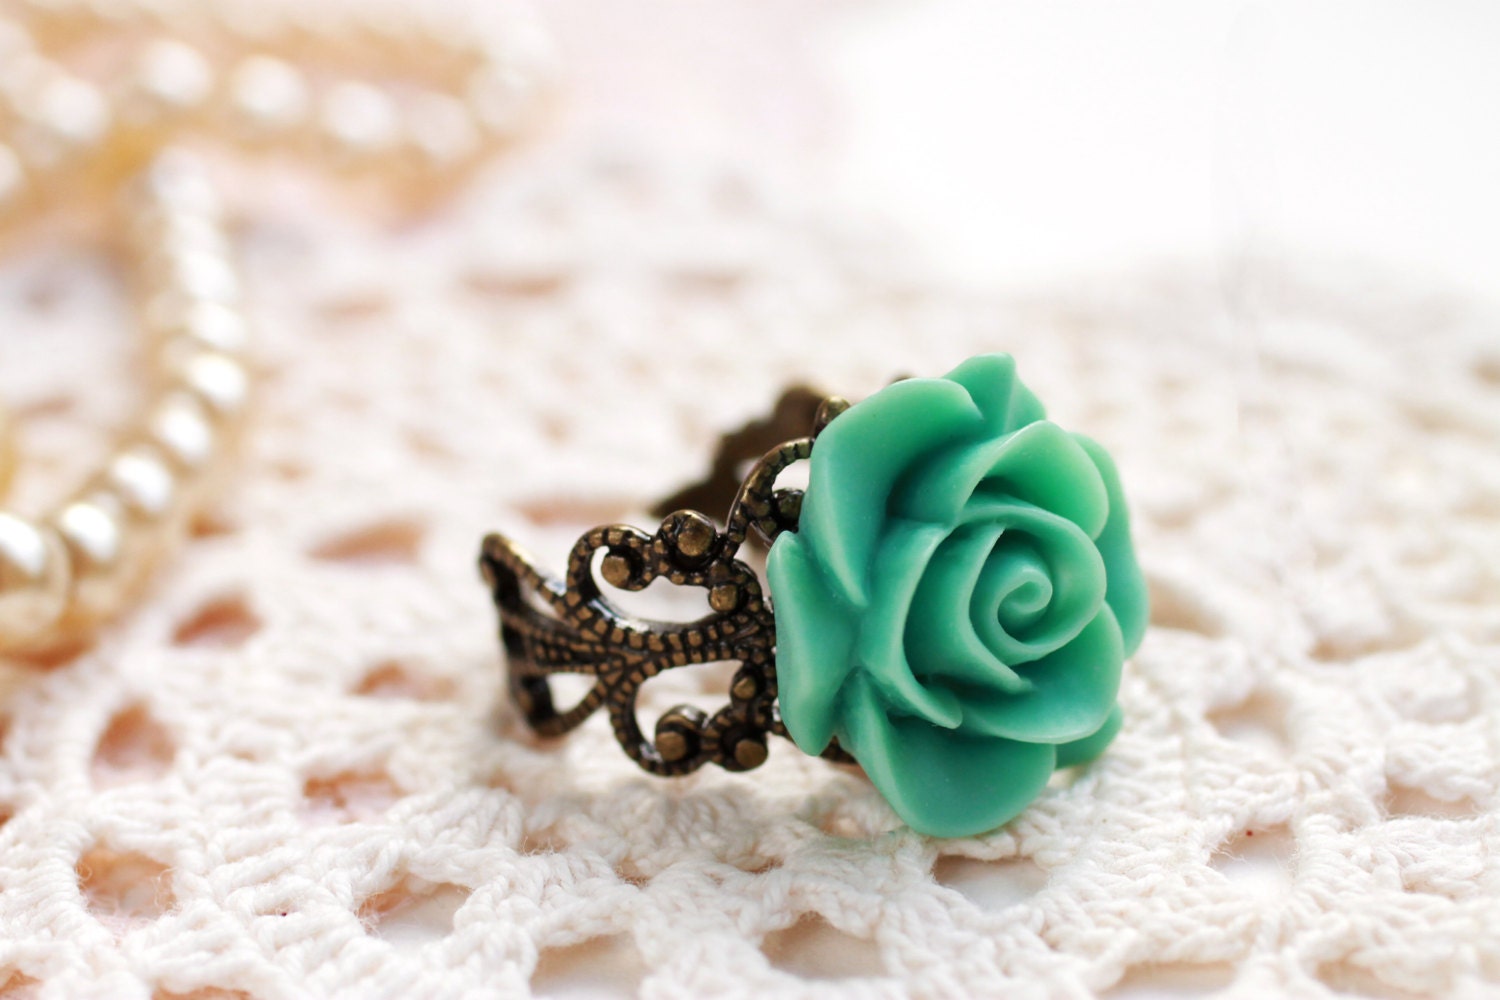 Mint green rose ring, teal rose ring, resin rose ring, resin flower ring, rose cabochon ring, etsy store , beautyfoodlfie.blogspot.com